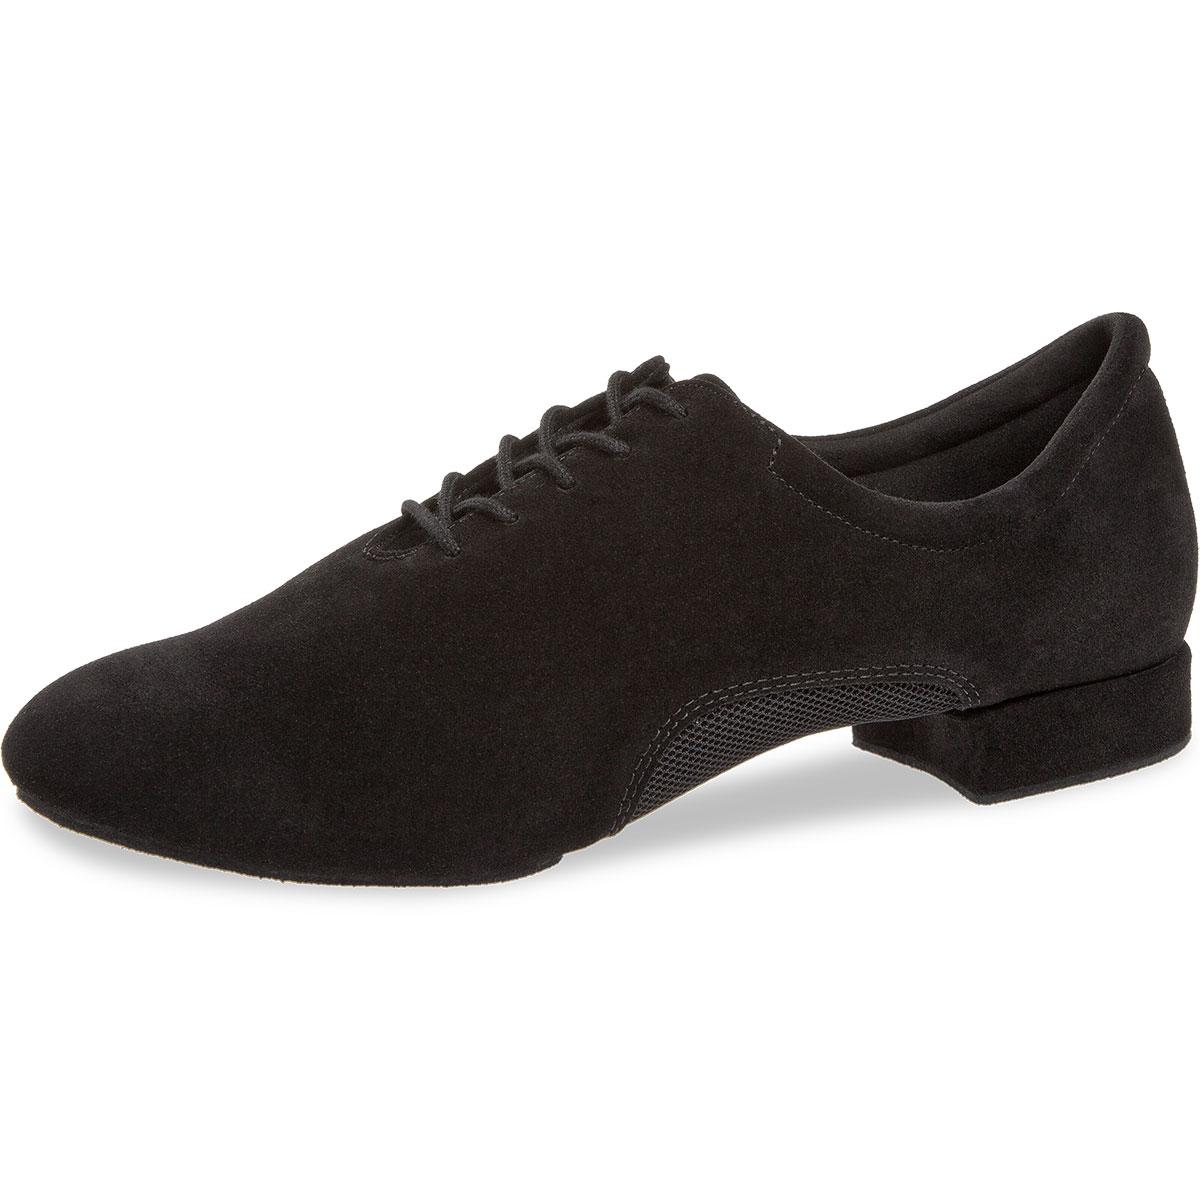 Buy Men's Ballroom Dance Shoes Black Leather Sole Tango Salsa Latin  Character Shoe, Black, 7 at Amazon.in